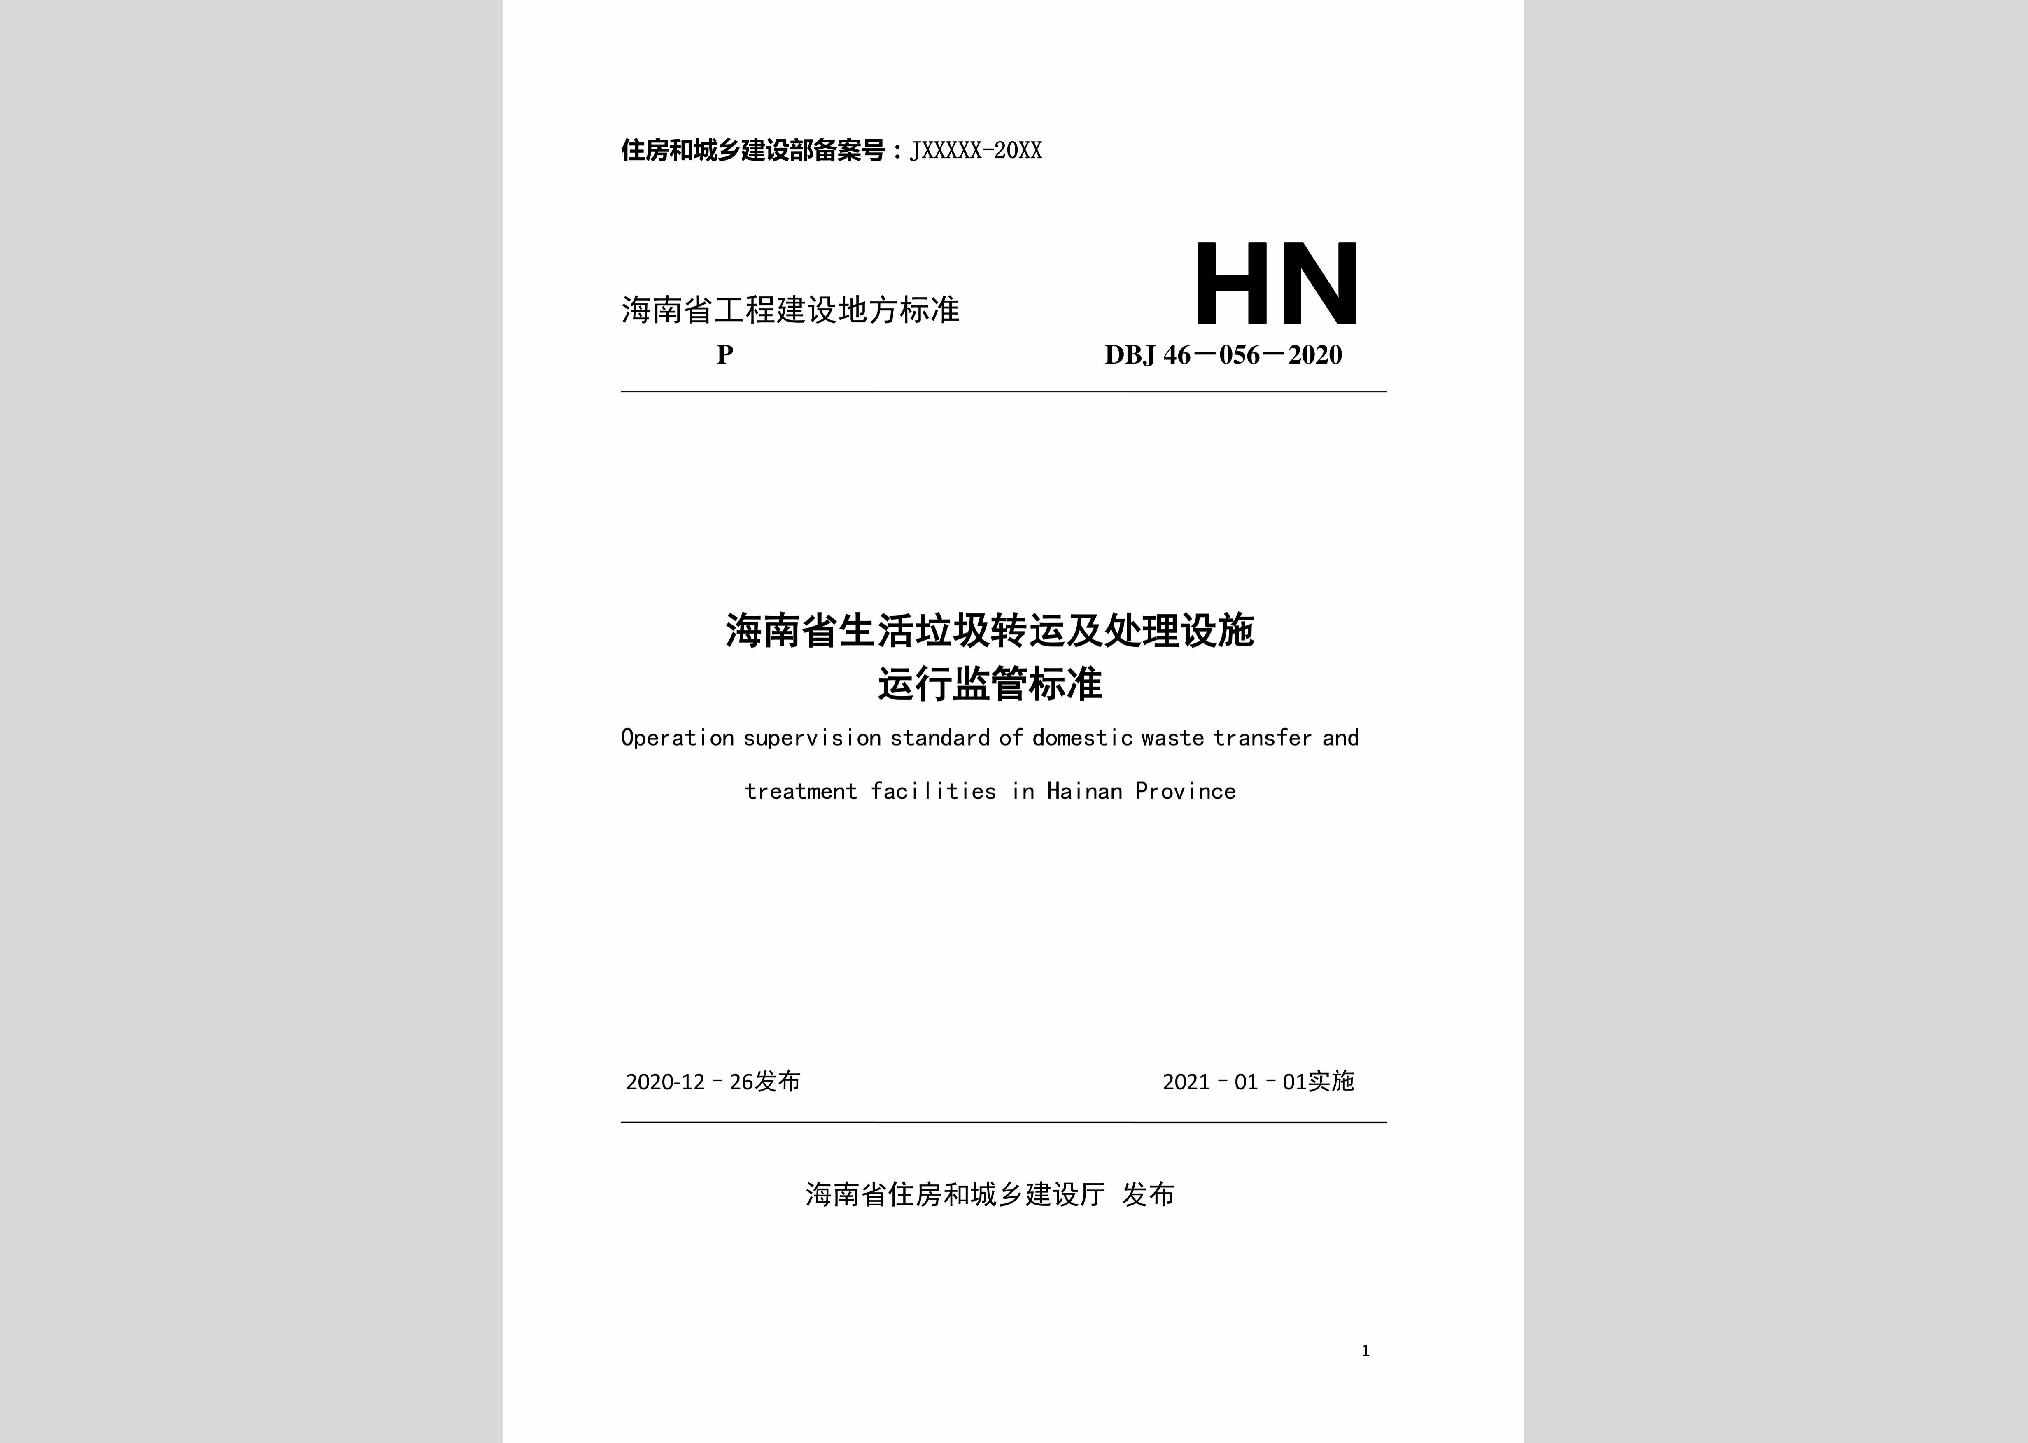 DBJ46-056-2020：海南省生活垃圾转运及处理设施运行监管标准